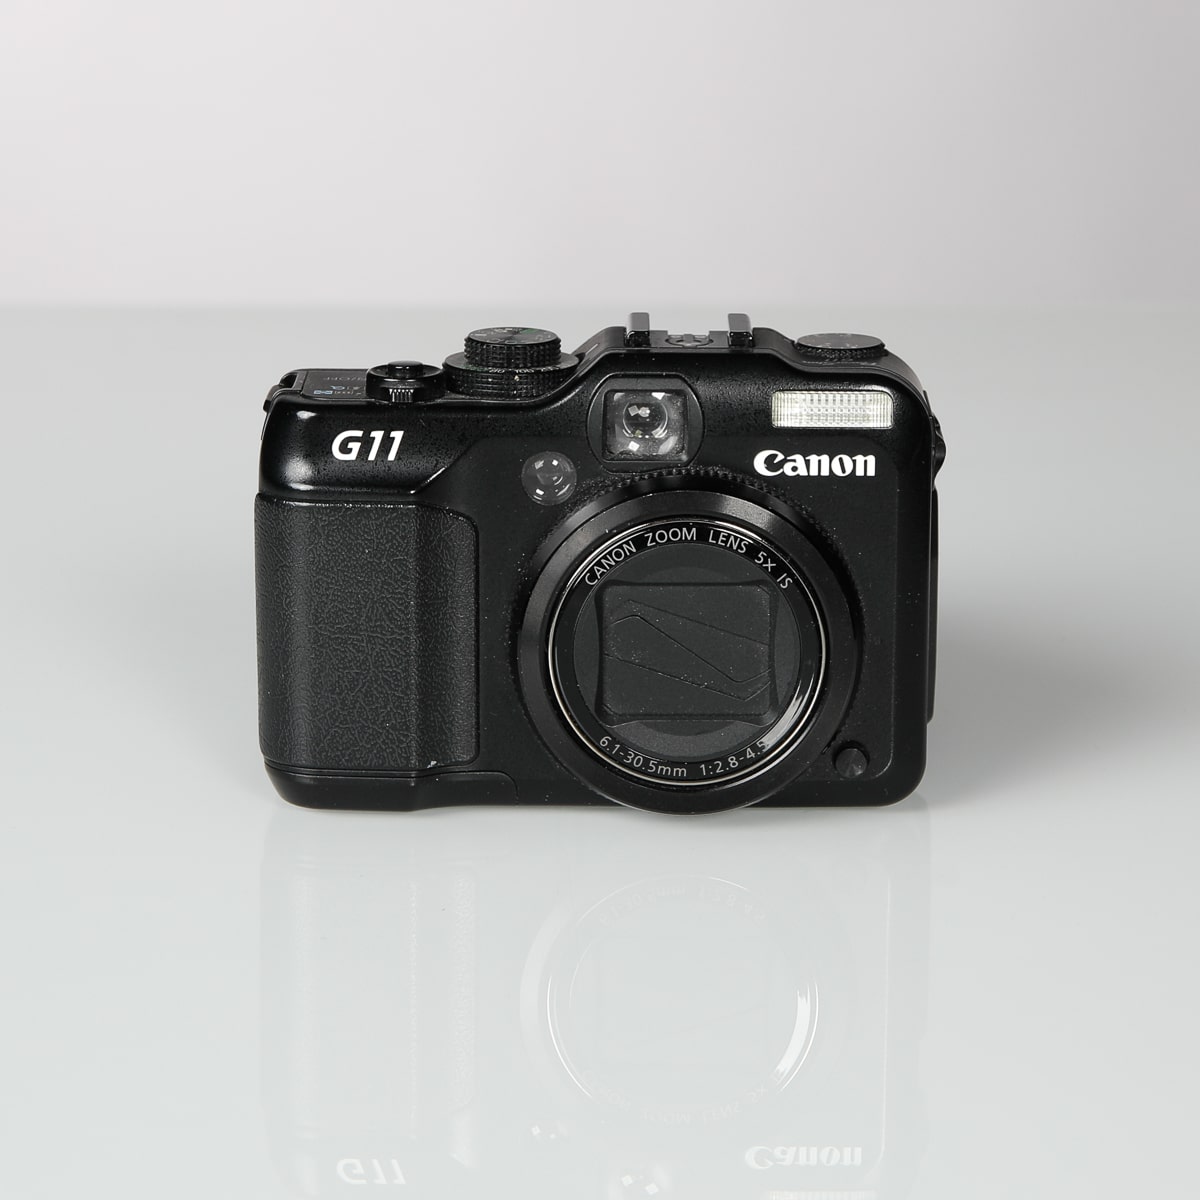 MYYTY Käytetty Canon Powershot G11 -kompaktikamera